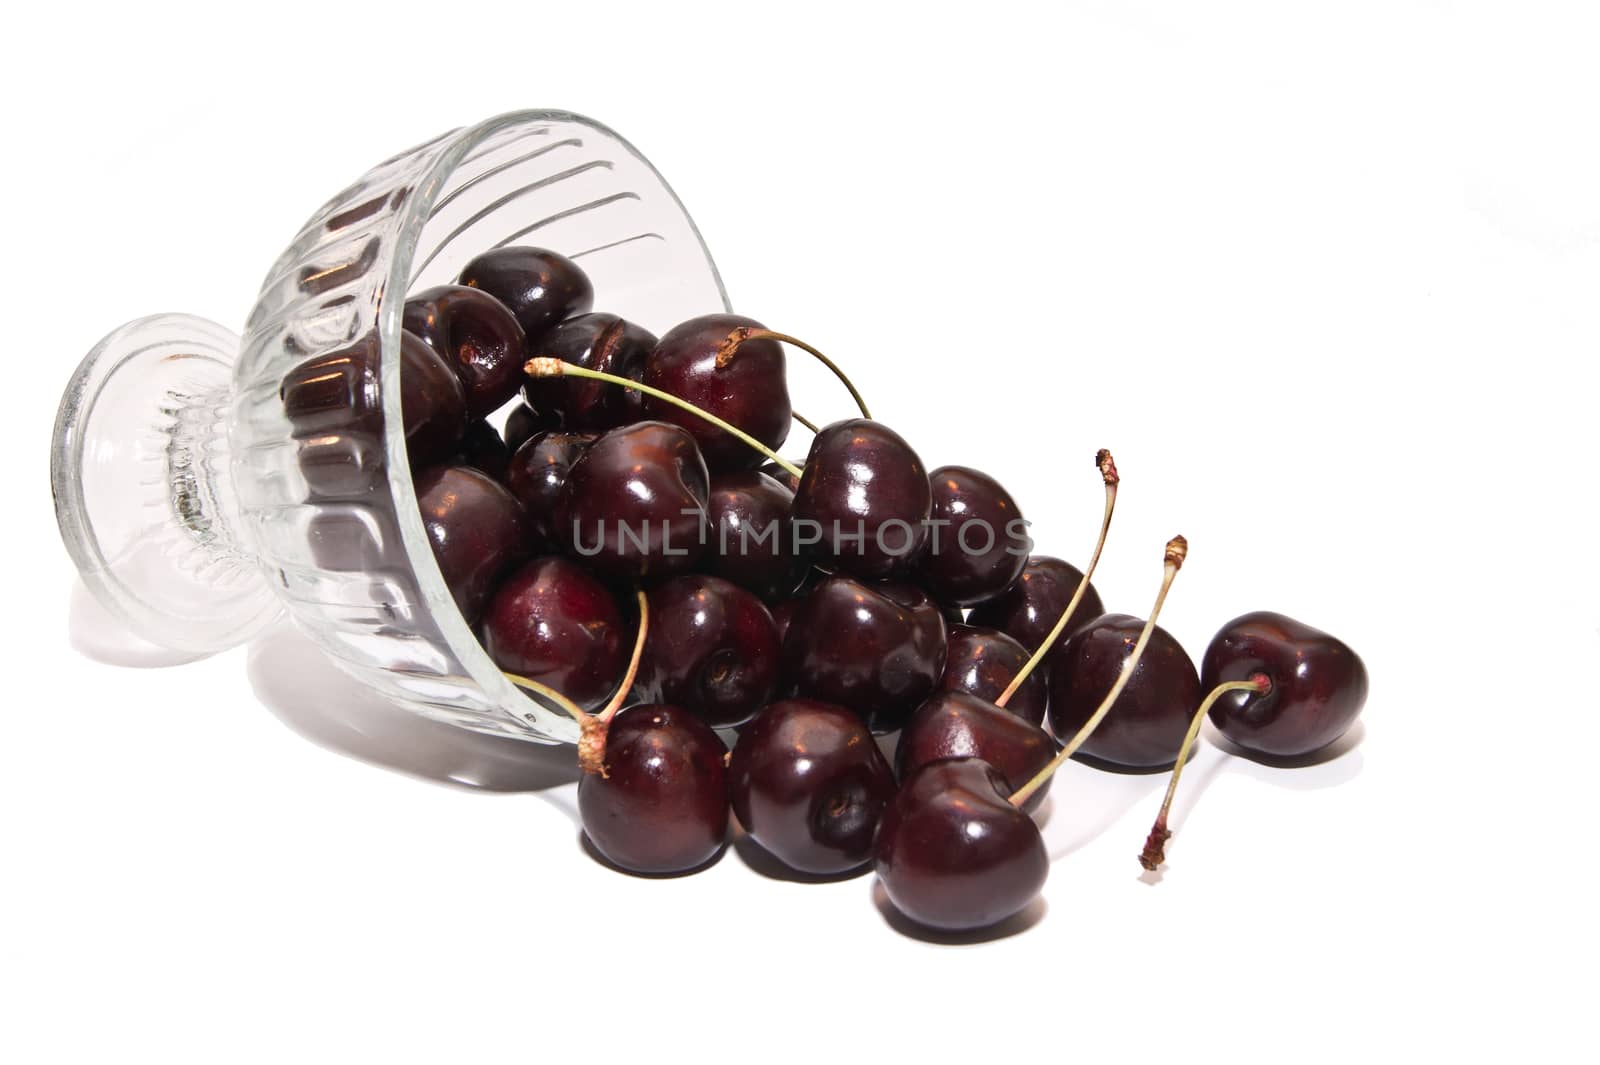 The ripe black cherry favorite, delicious fruit.